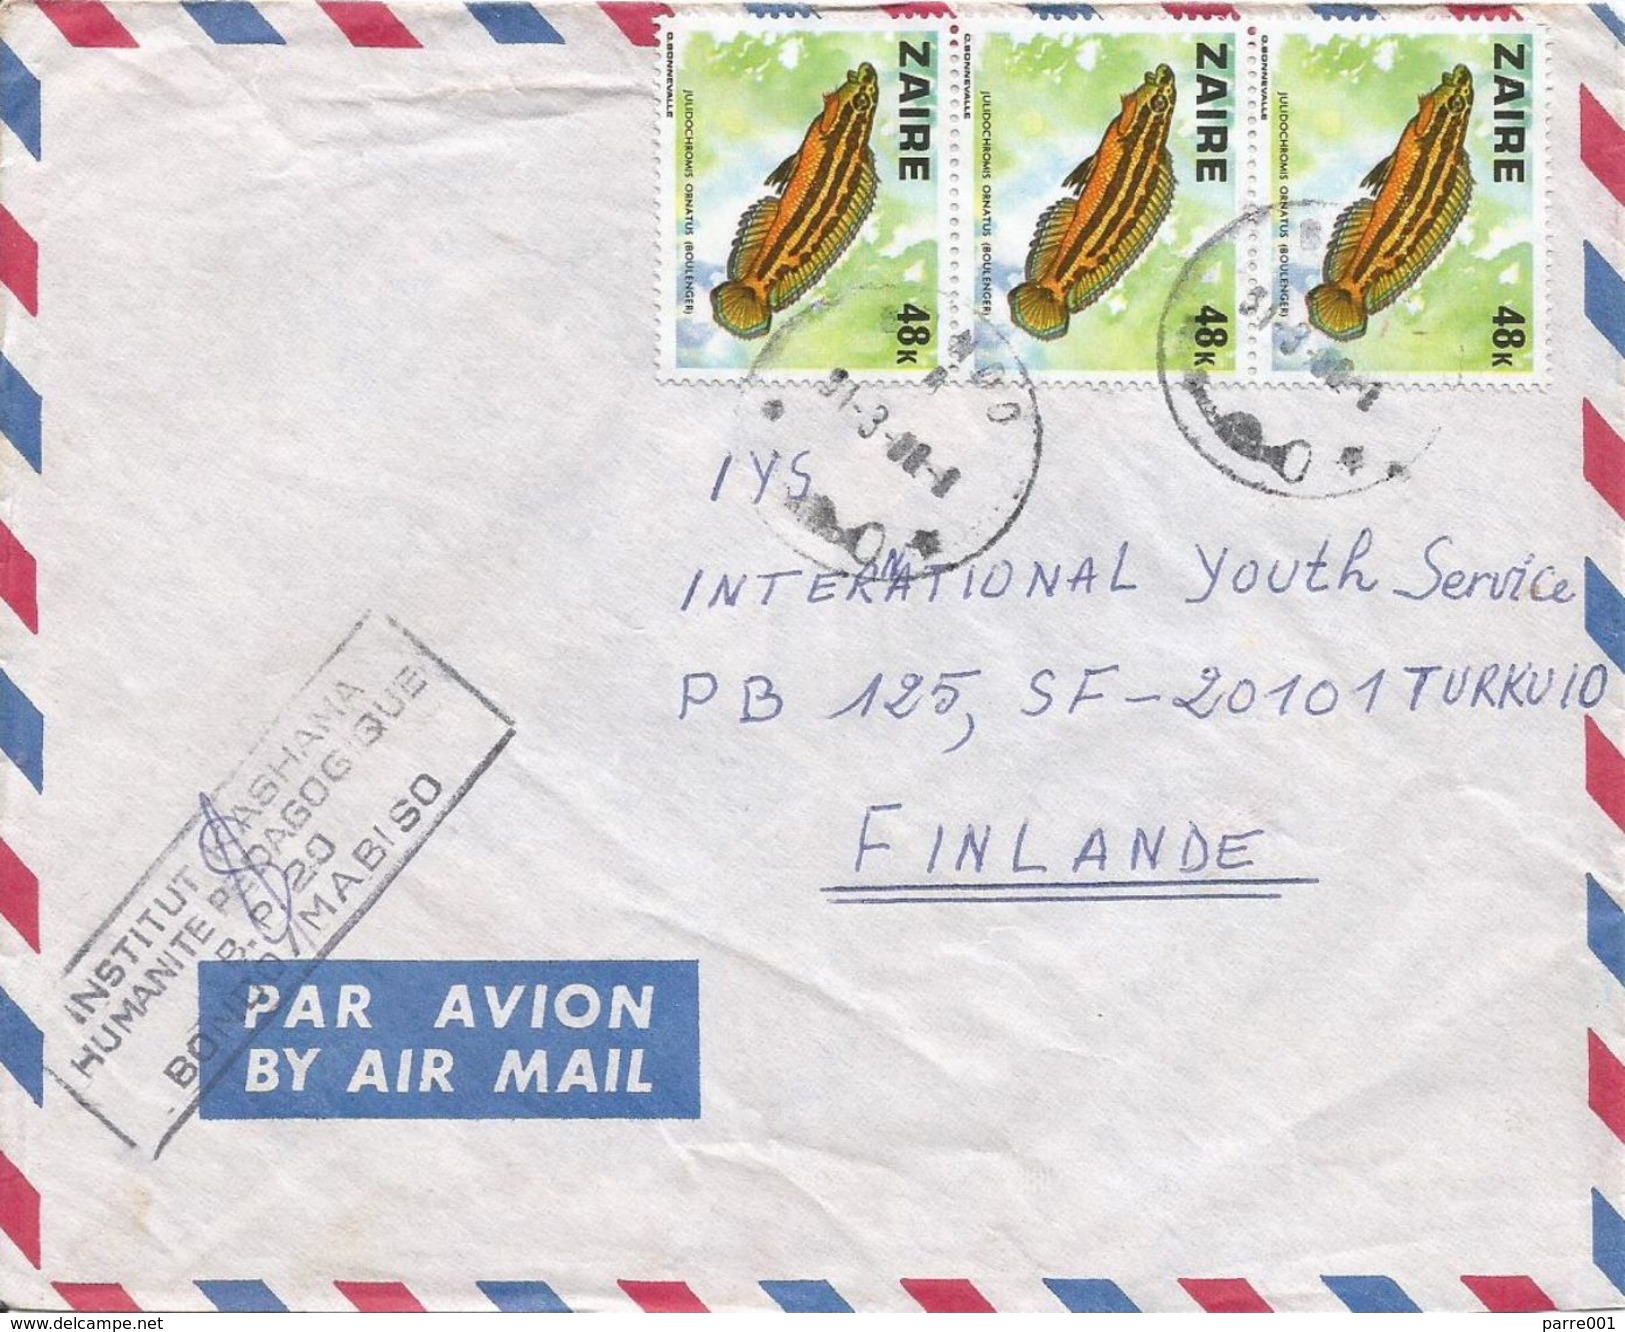 RDC DRC Congo Zaire 1980 Bondo Fresh Water Endemic Fish Julidochromis Ornatus Cover - Used Stamps